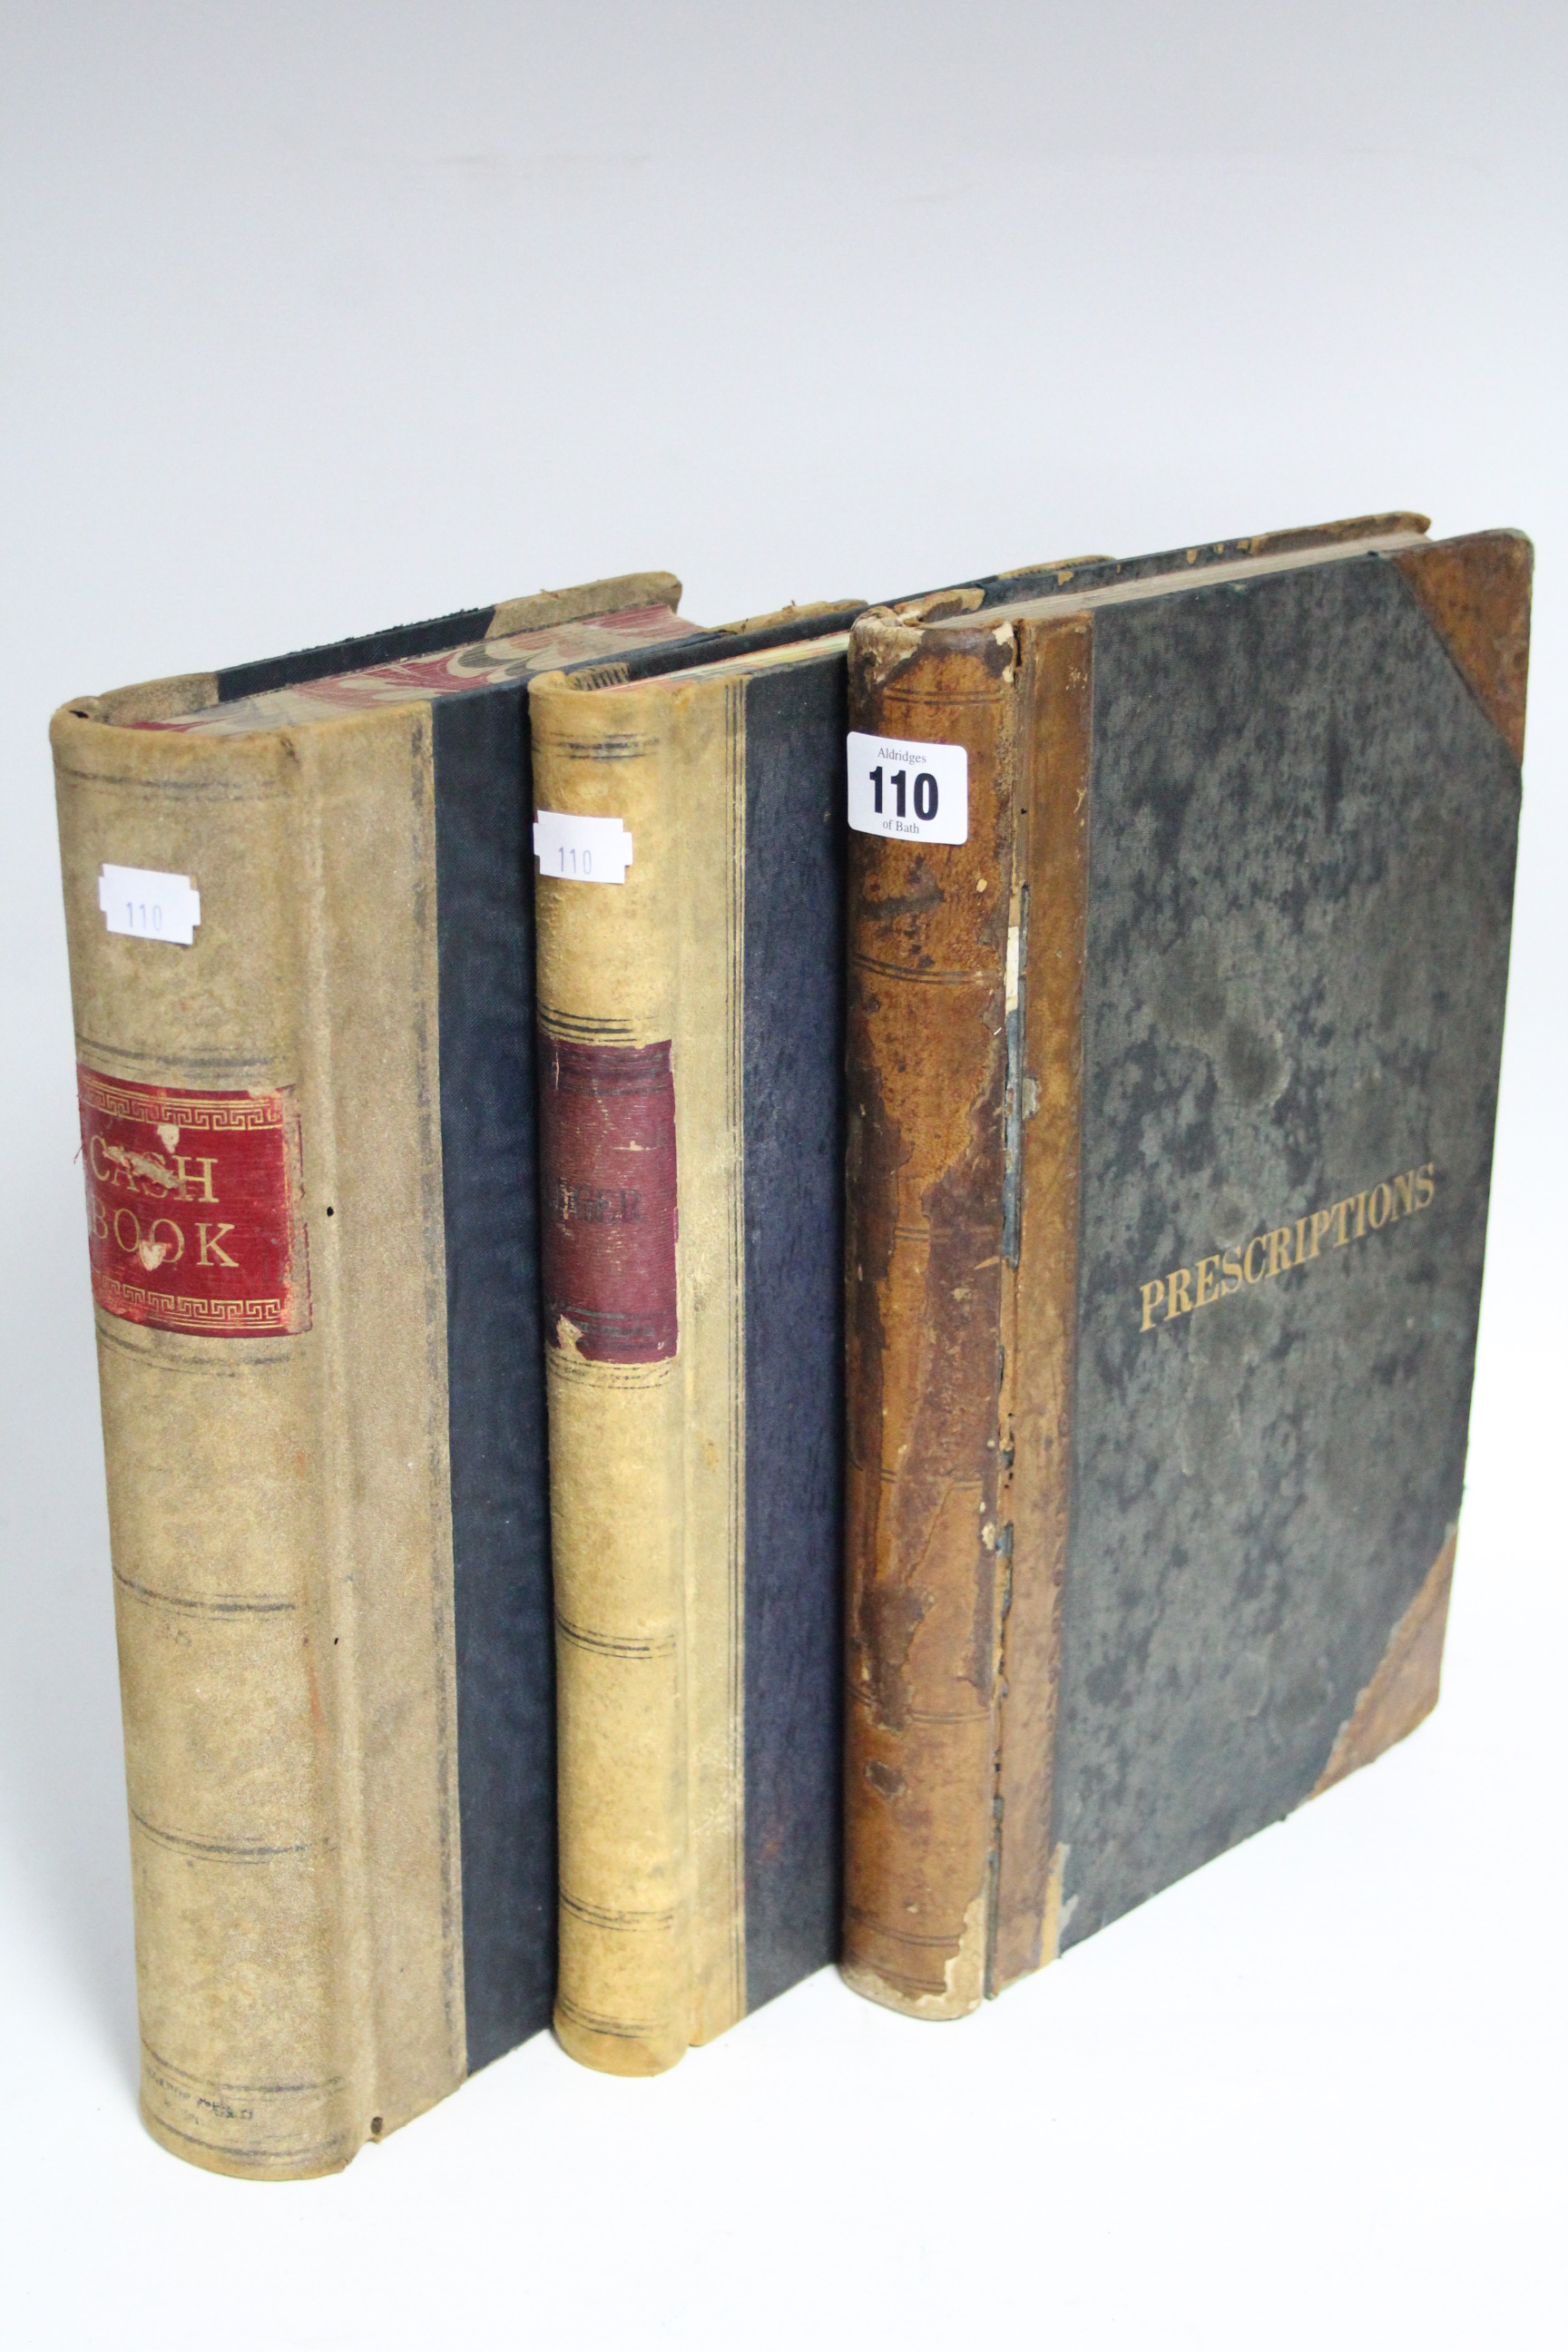 A late 19th century leather-bound “Prescriptions” book; & two early 20th century leather-bound